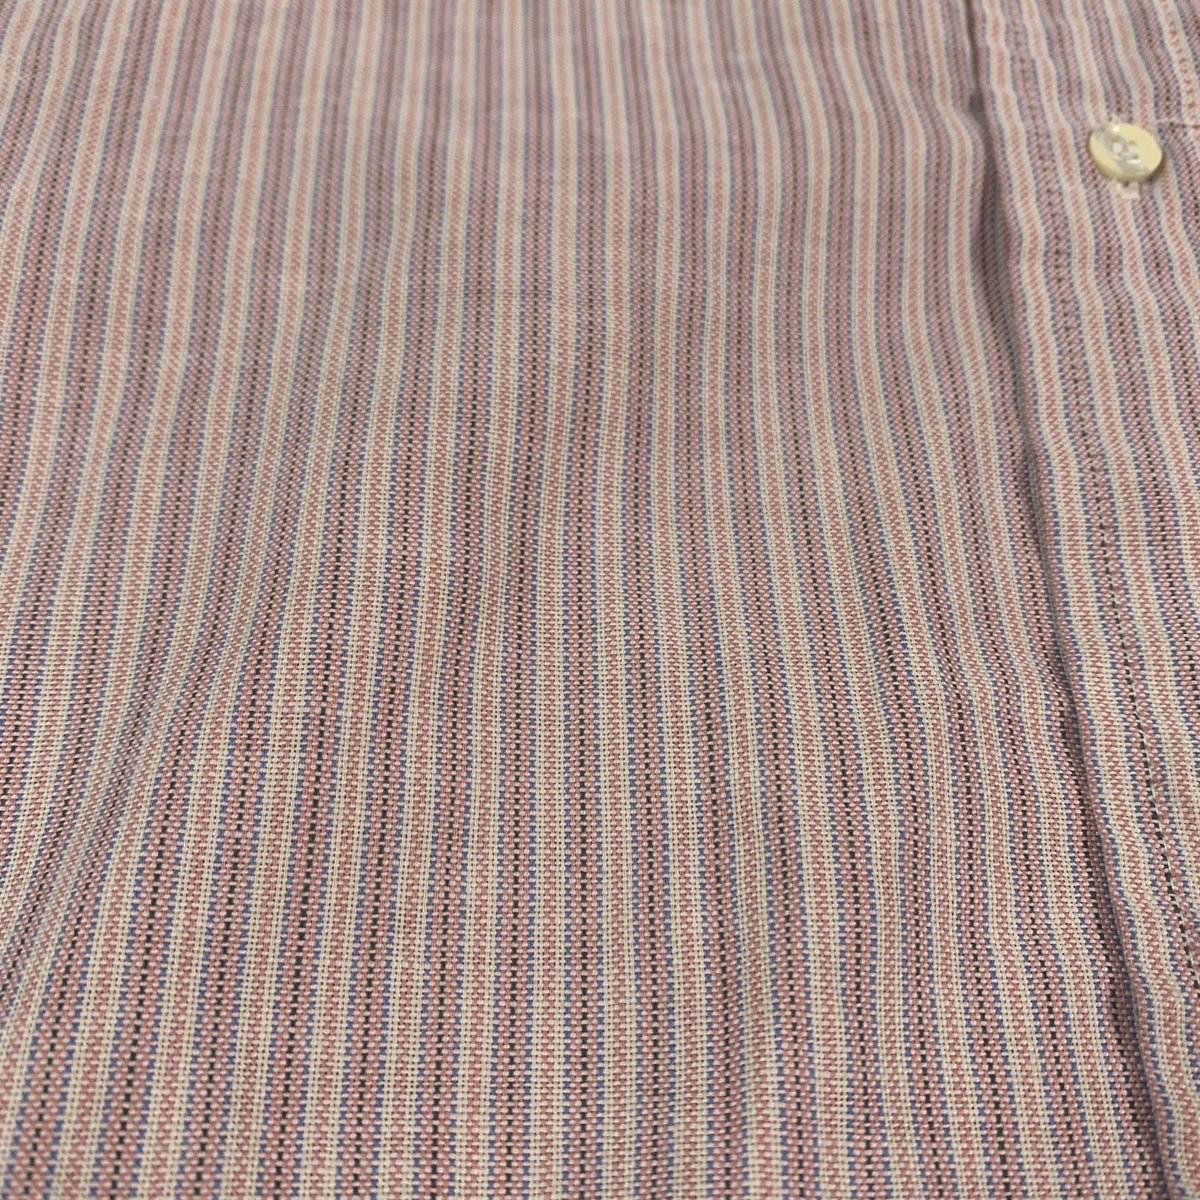 Vintage Levi&#39;s “Button Down” Shirt - jointcustodydc